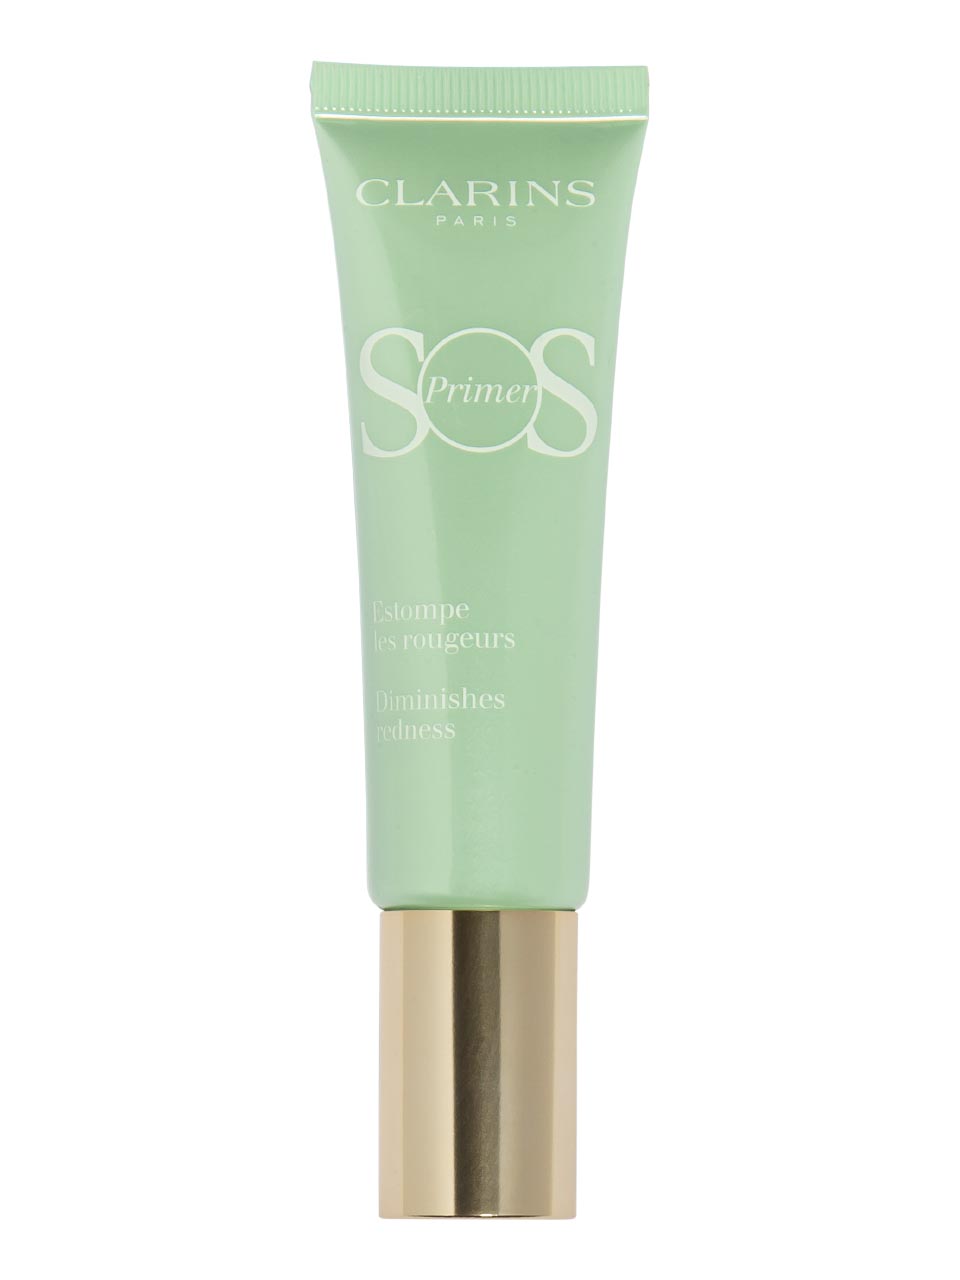 Clarins SOS primer SOS Primer N° 4 Green 30 ml null - onesize - 1